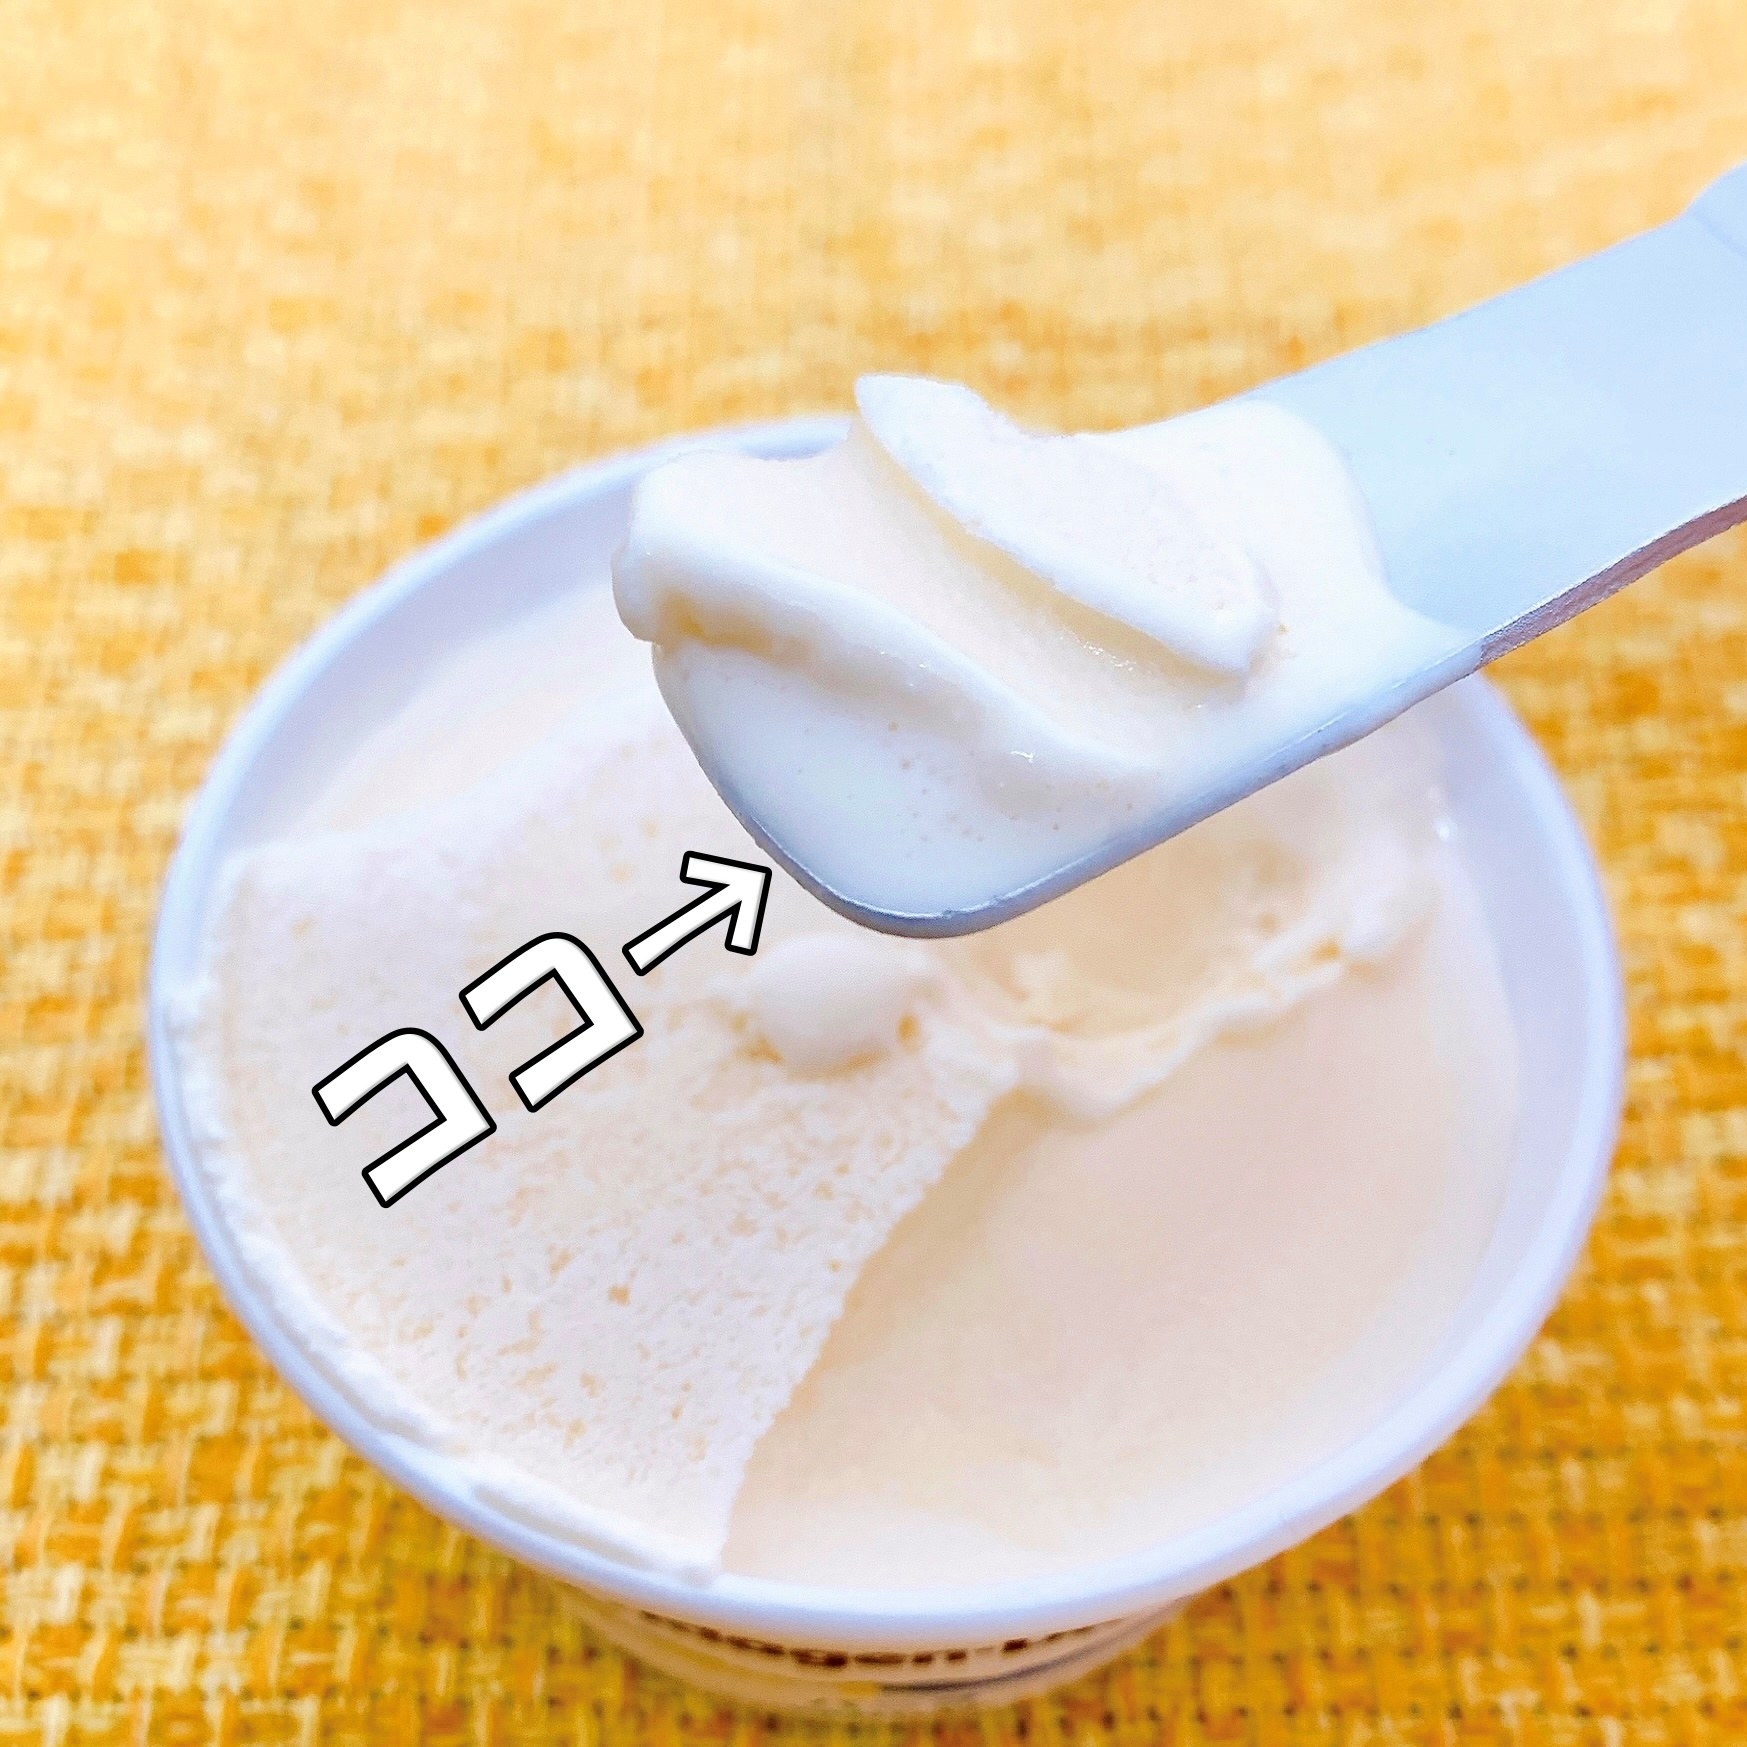 DAISO（ダイソー）のおすすめ便利グッズ「アルミアイスクリームスプーン（アニマル）」冷凍庫から出したてのアイスをすぐ食べられる